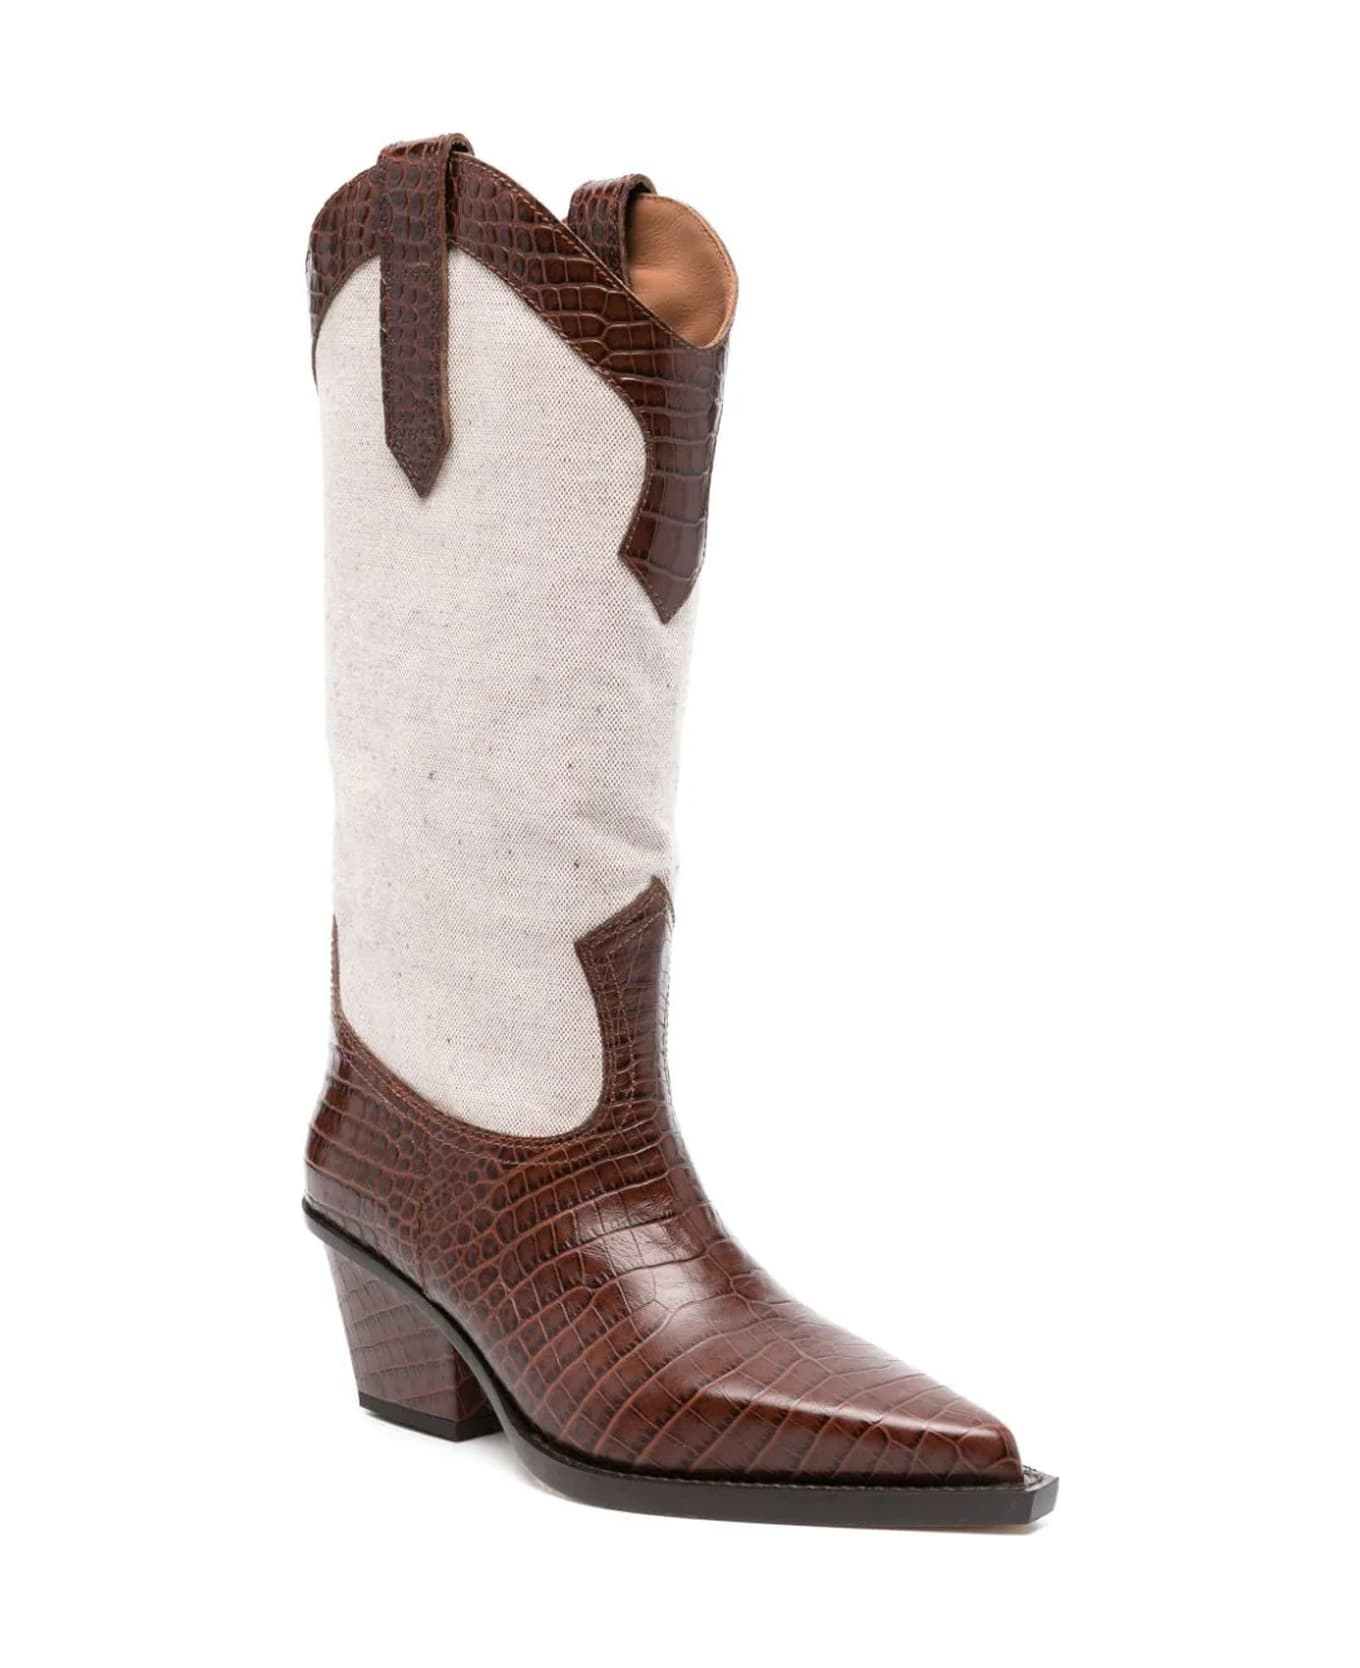 Paris Texas Boots - Brown